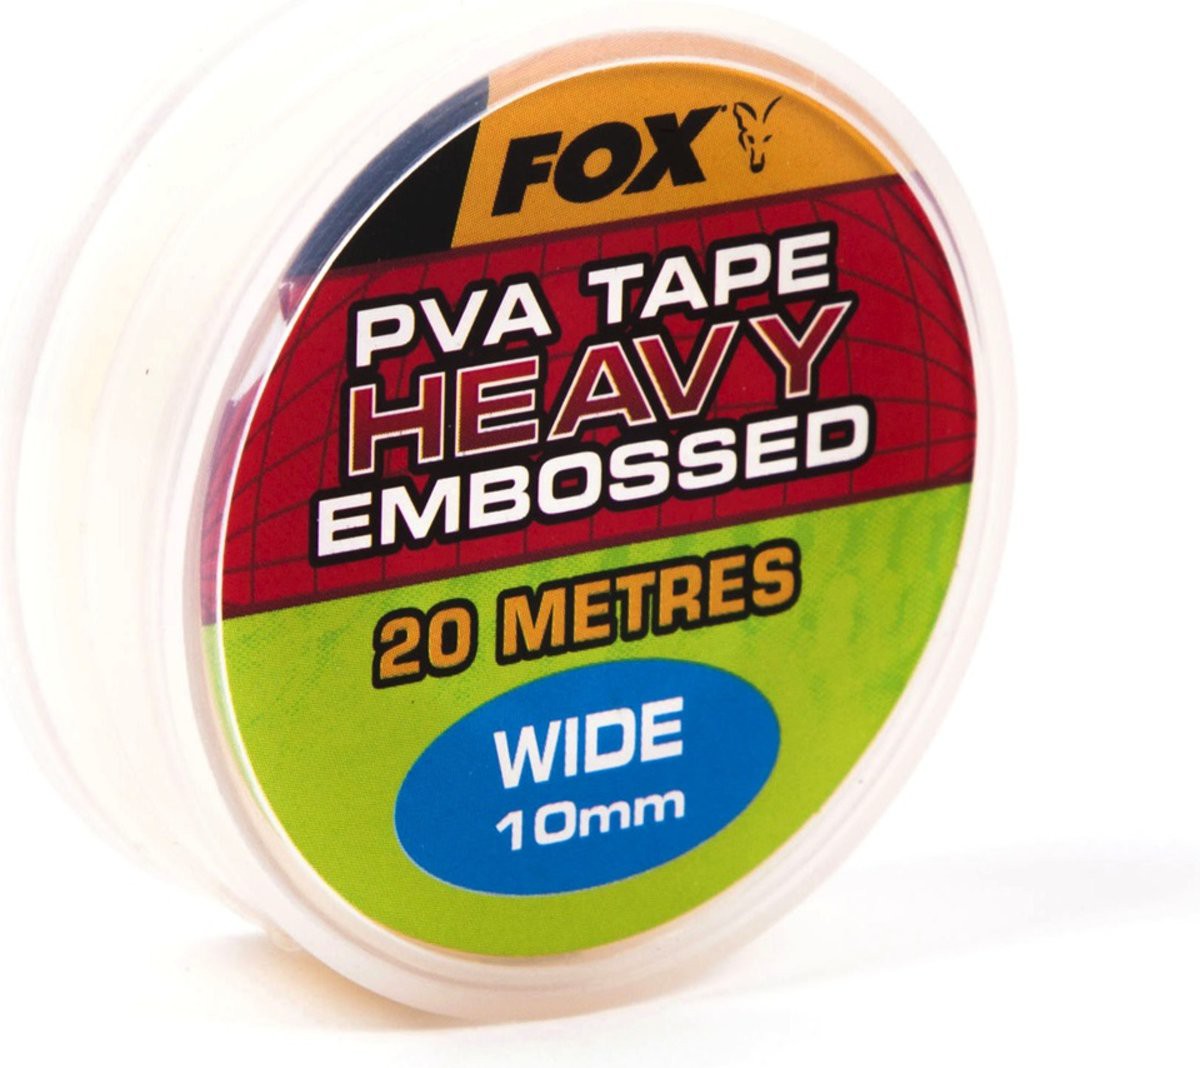 Fox PVA Tape Heavy Embossed